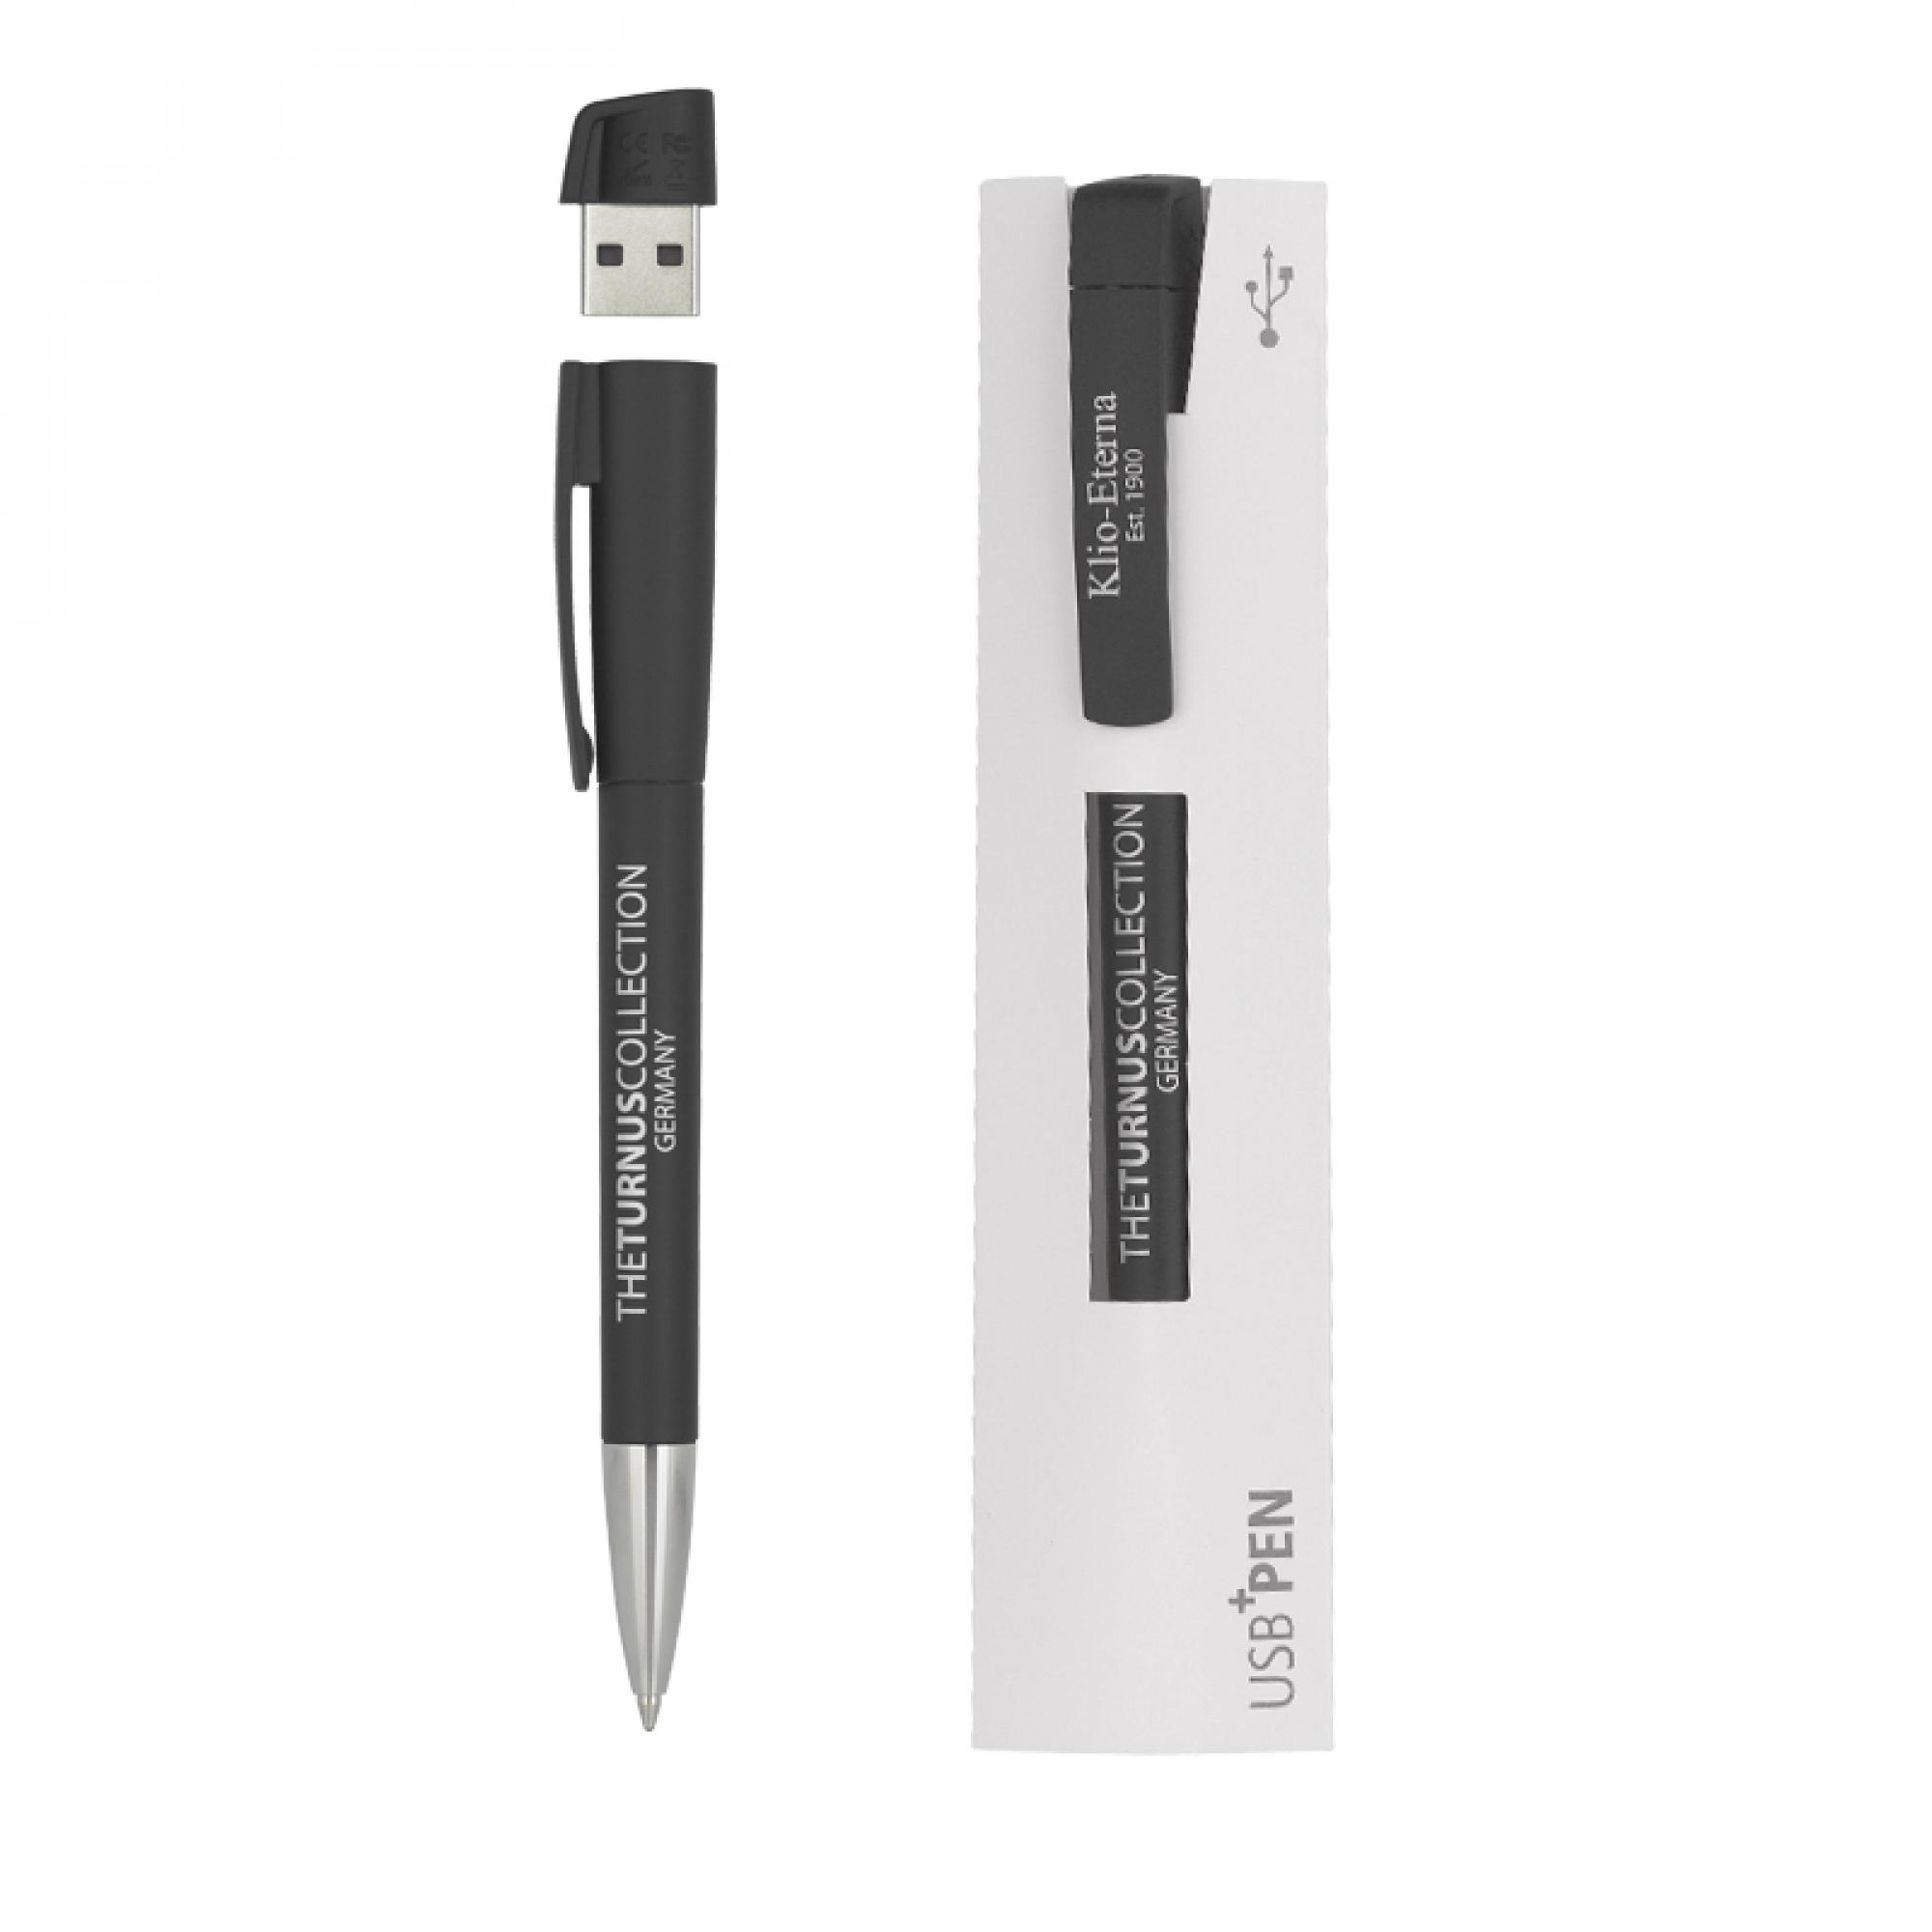 Ручка с флеш-картой USB 16GB «TURNUSsofttouch M», цвет черный, фото 2